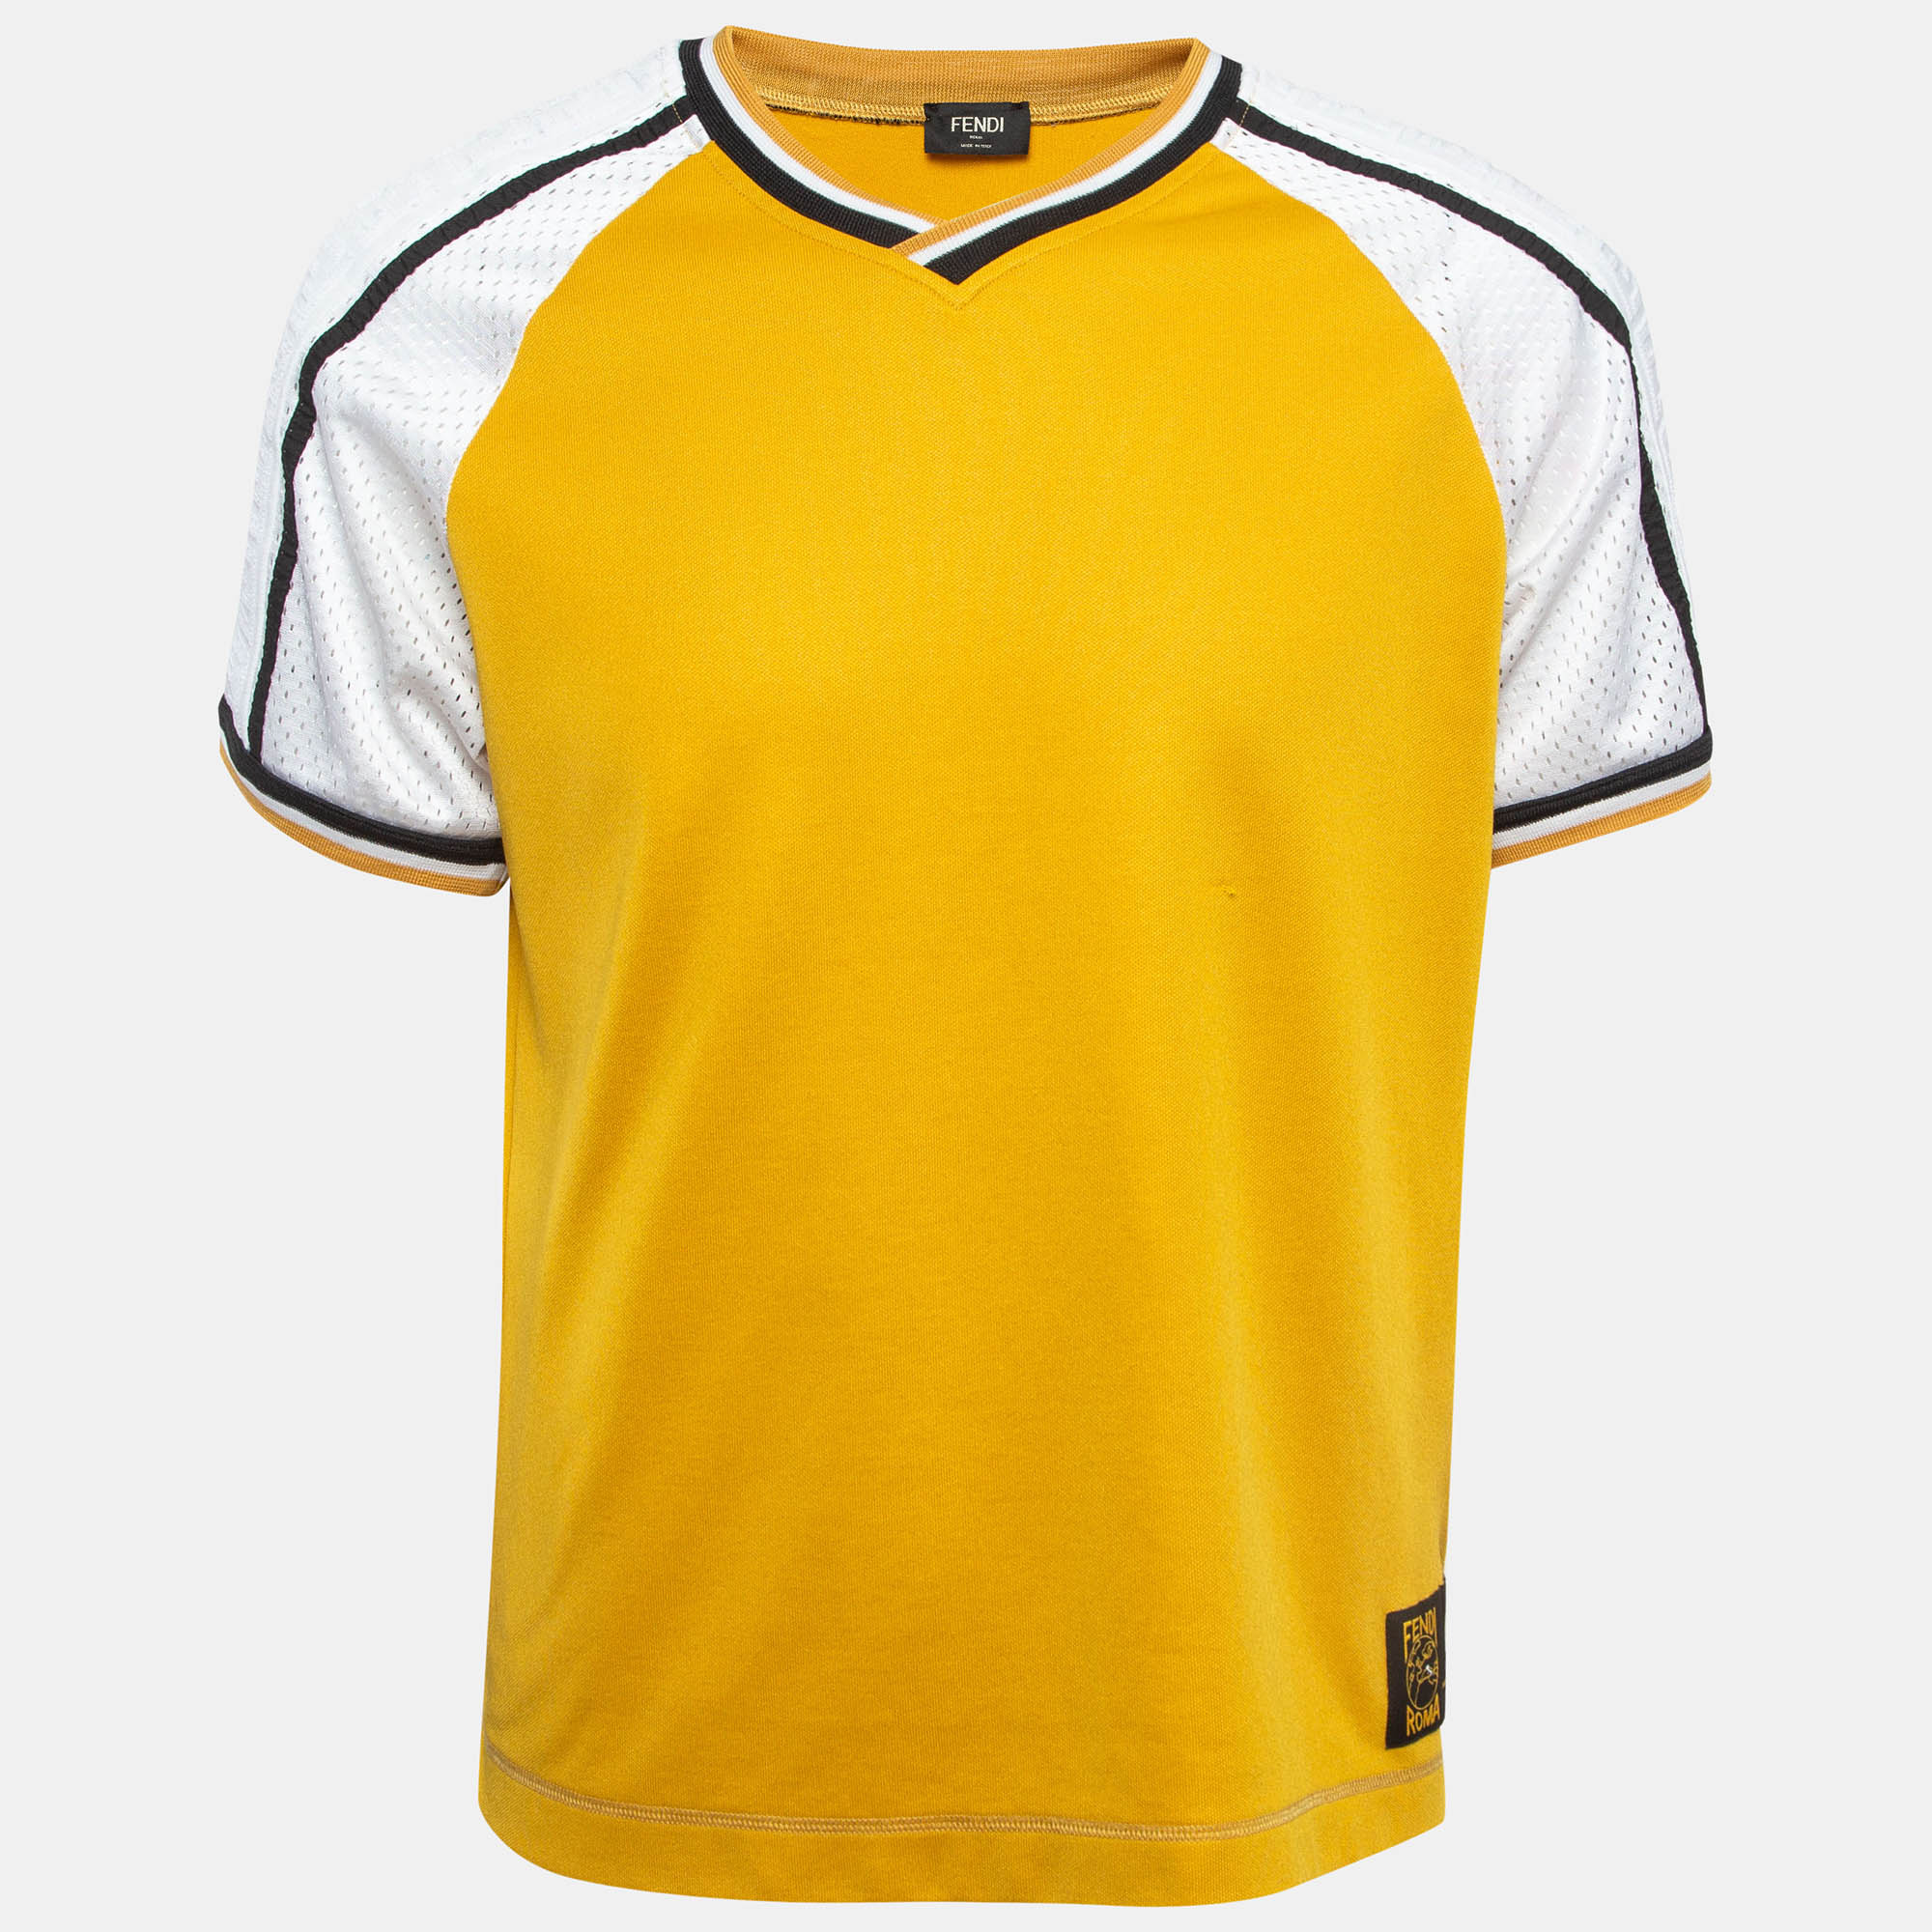 Fendi yellow mesh trim jersey v-neck half sleeve t-shirt s